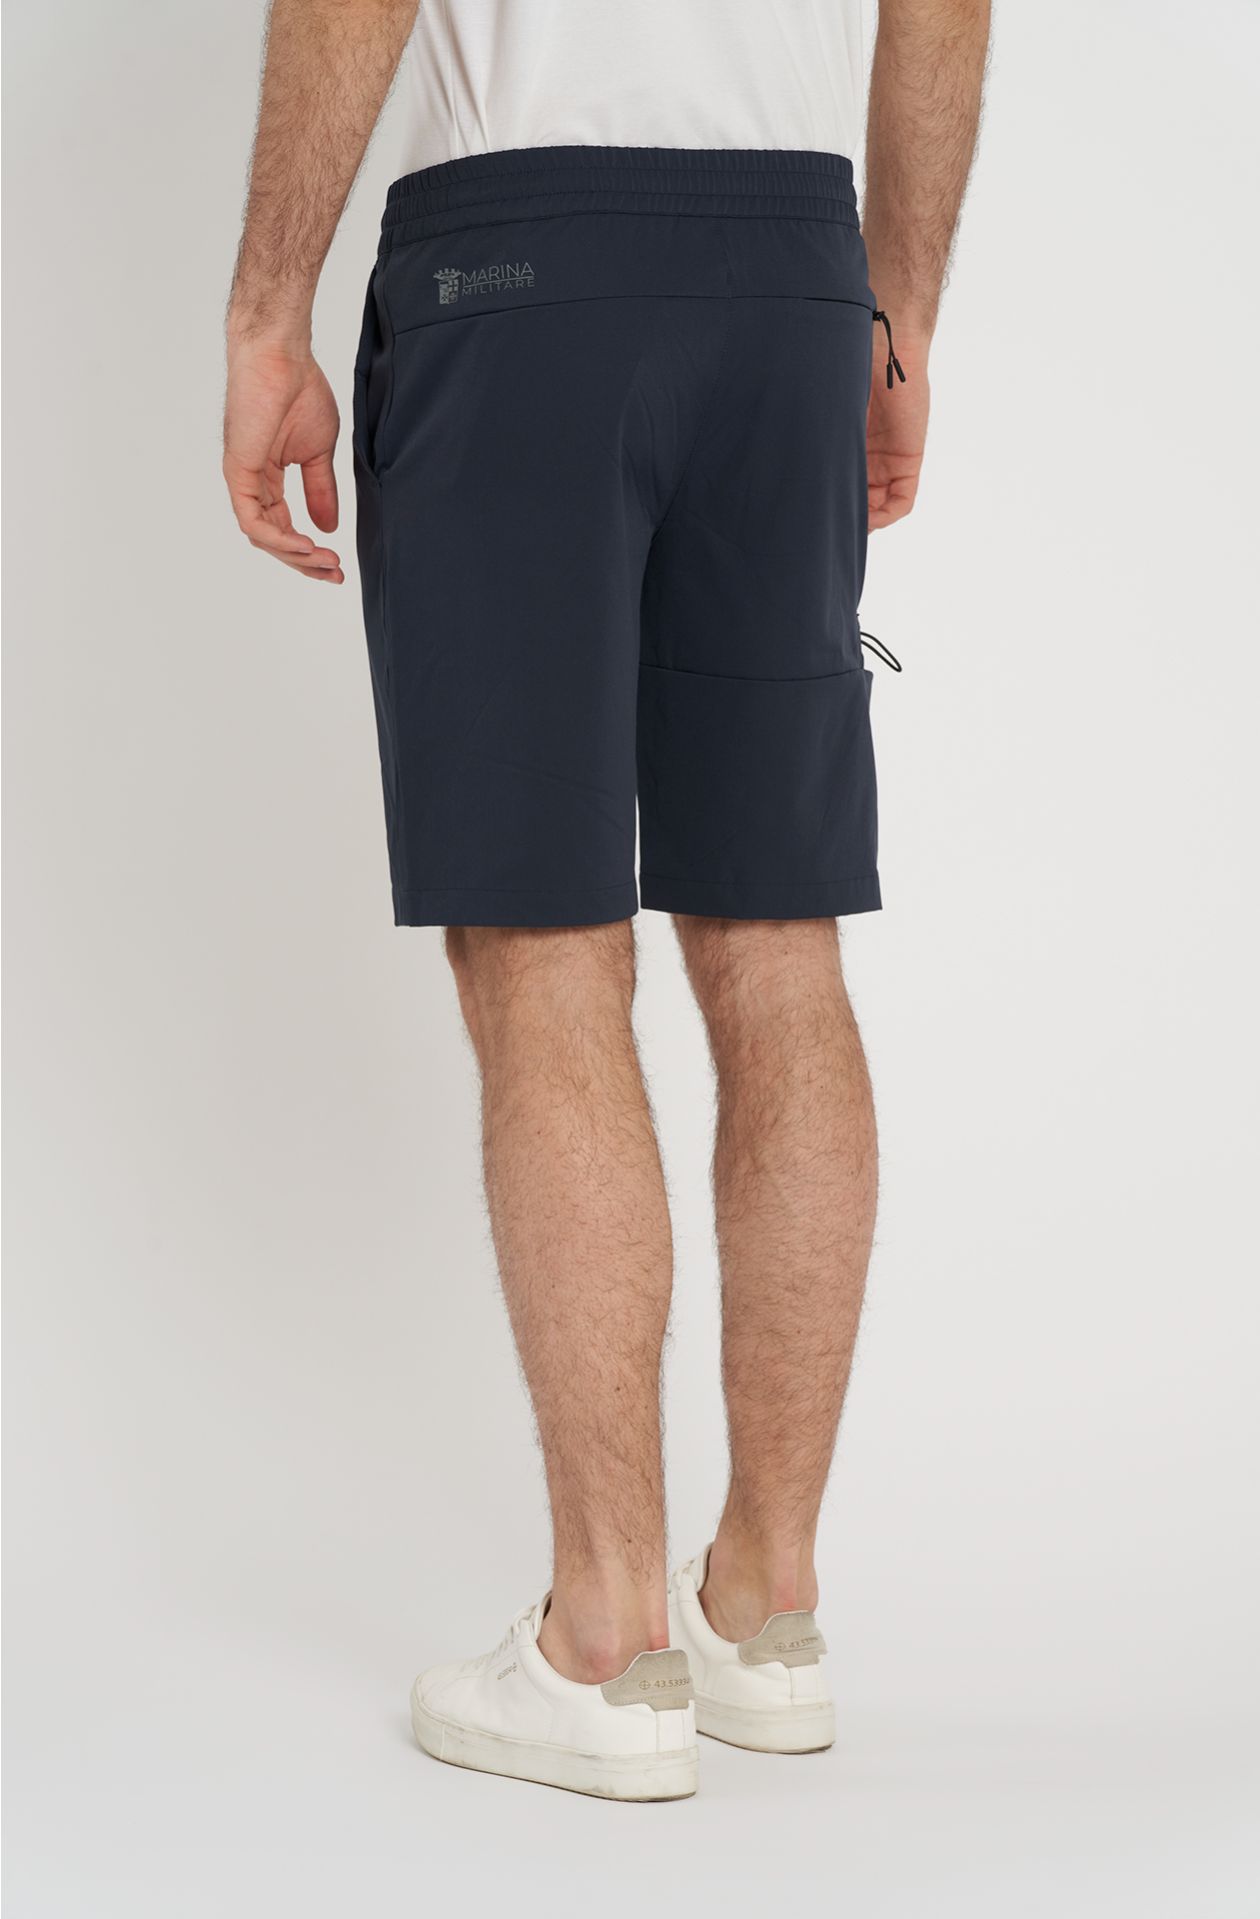 Technical Bermuda shorts